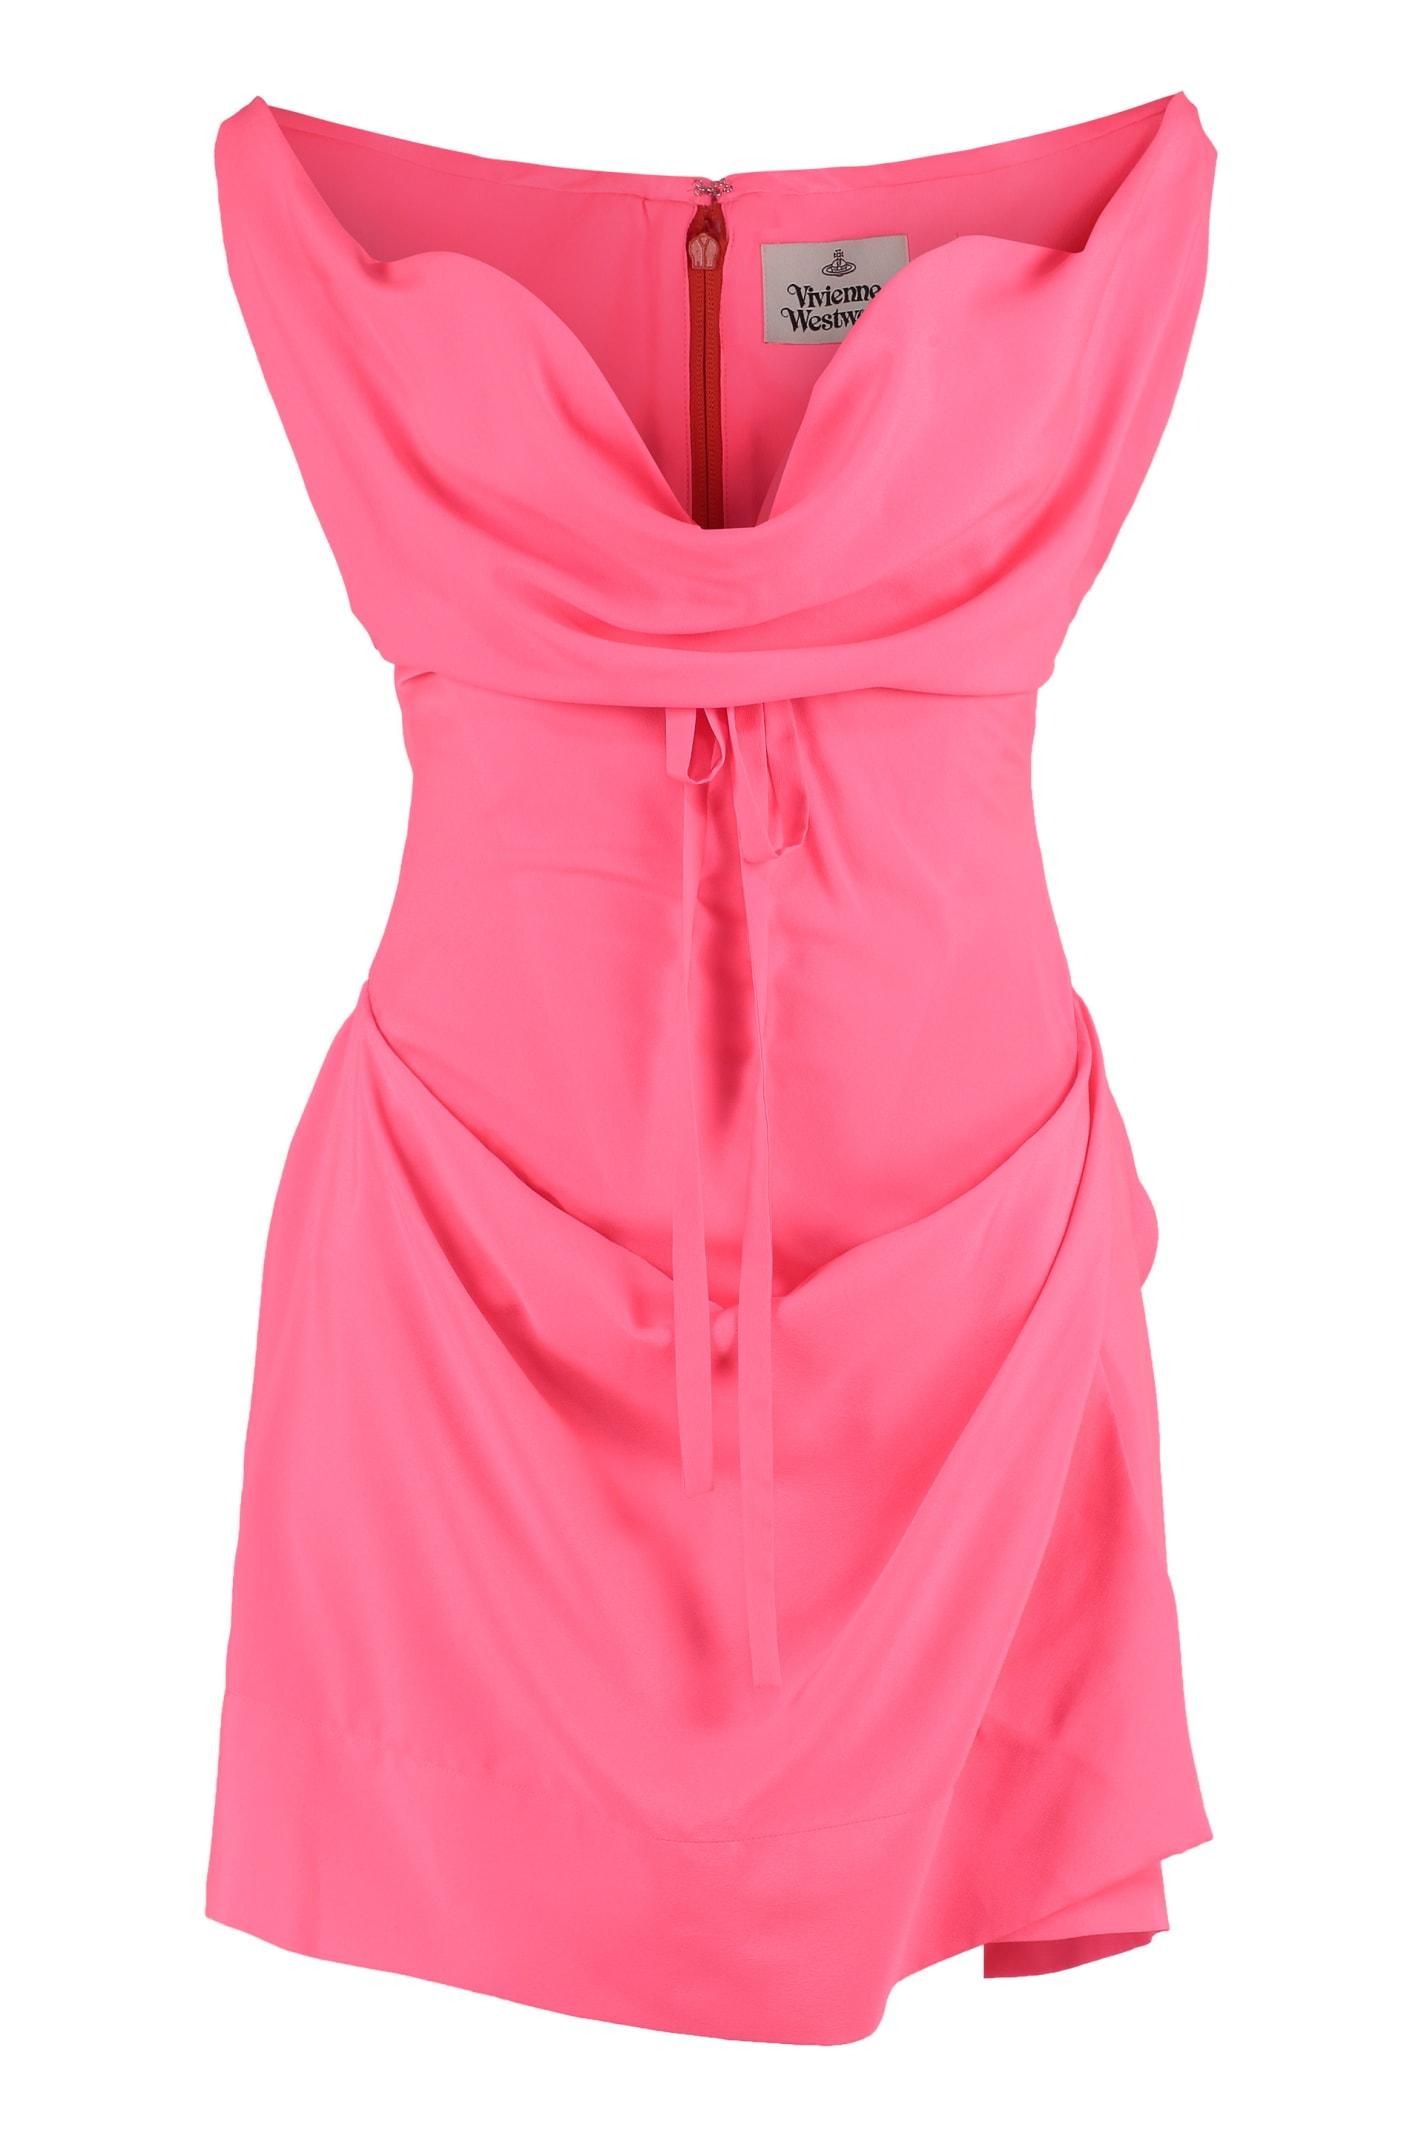 Vivienne Westwood Iwona Corset Dress in Pink | Lyst